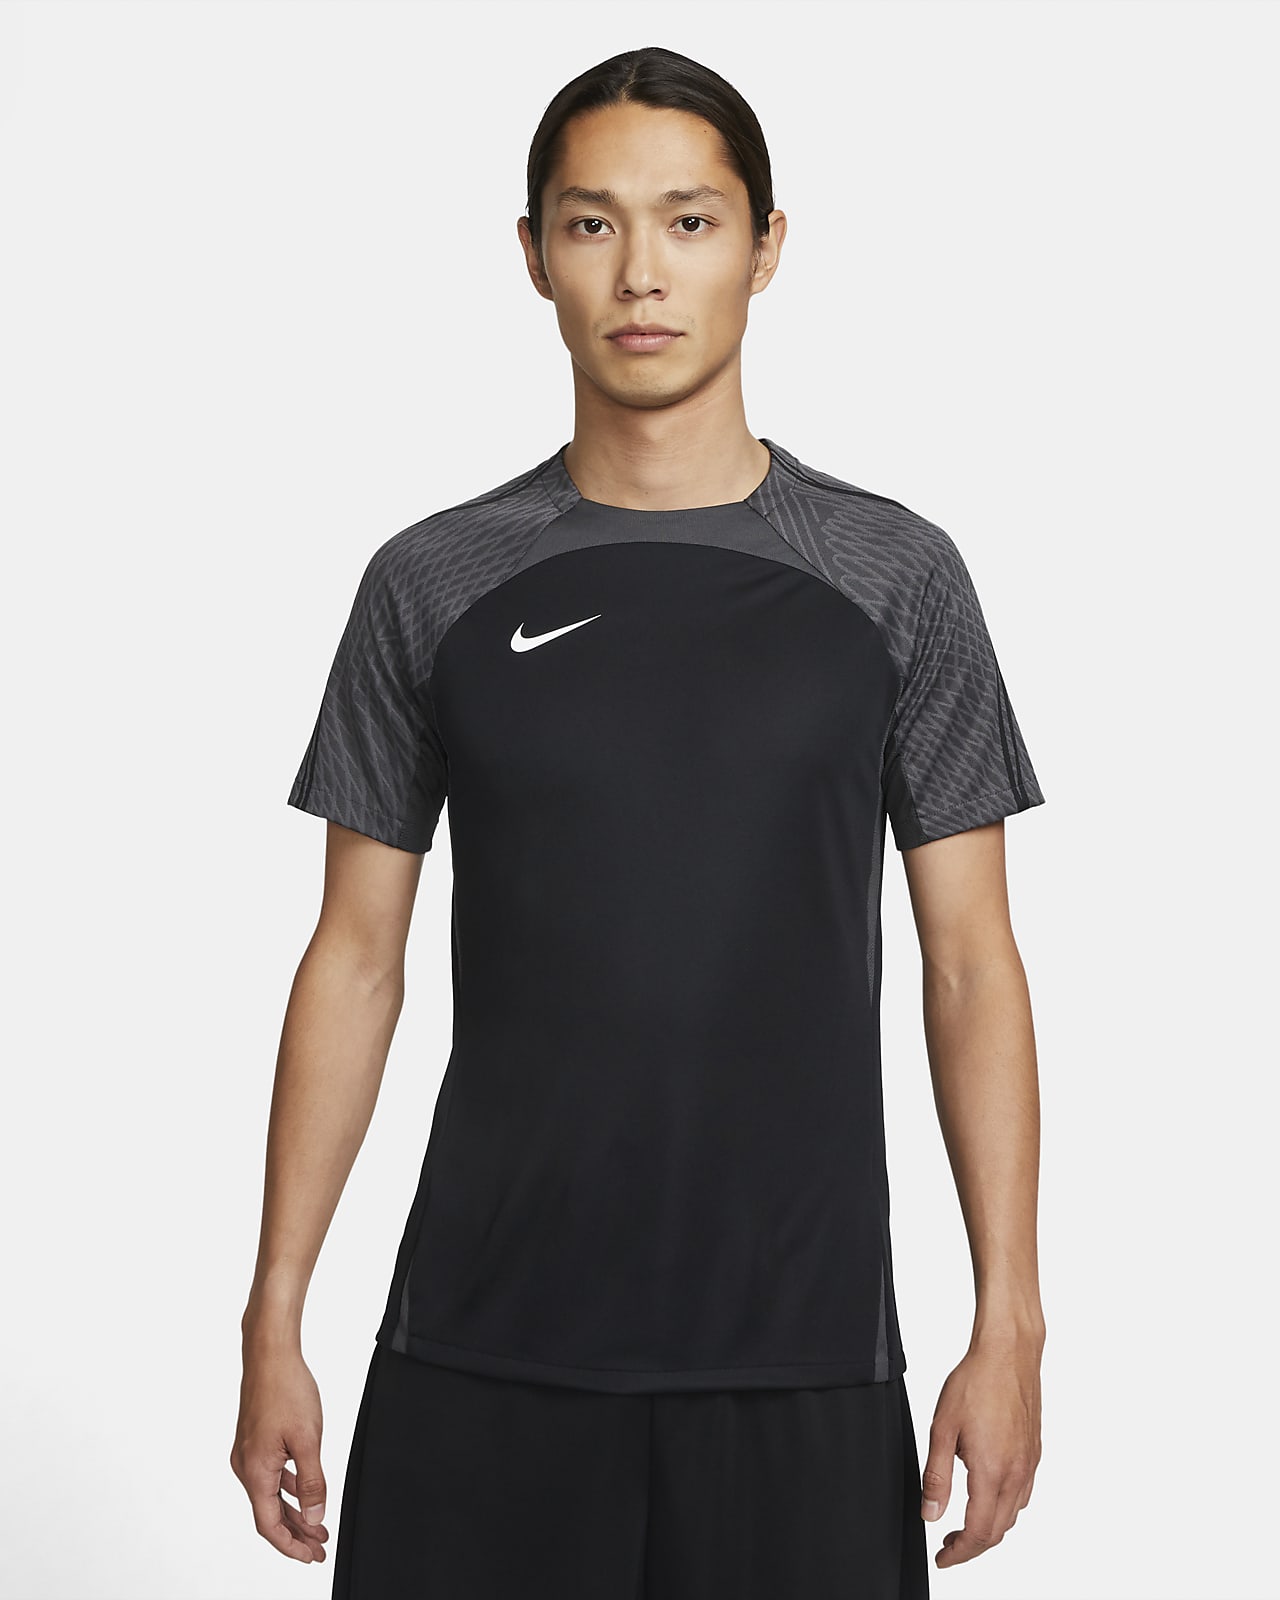 Nike Dri-FIT Strike Men's Short-Sleeve Football Top